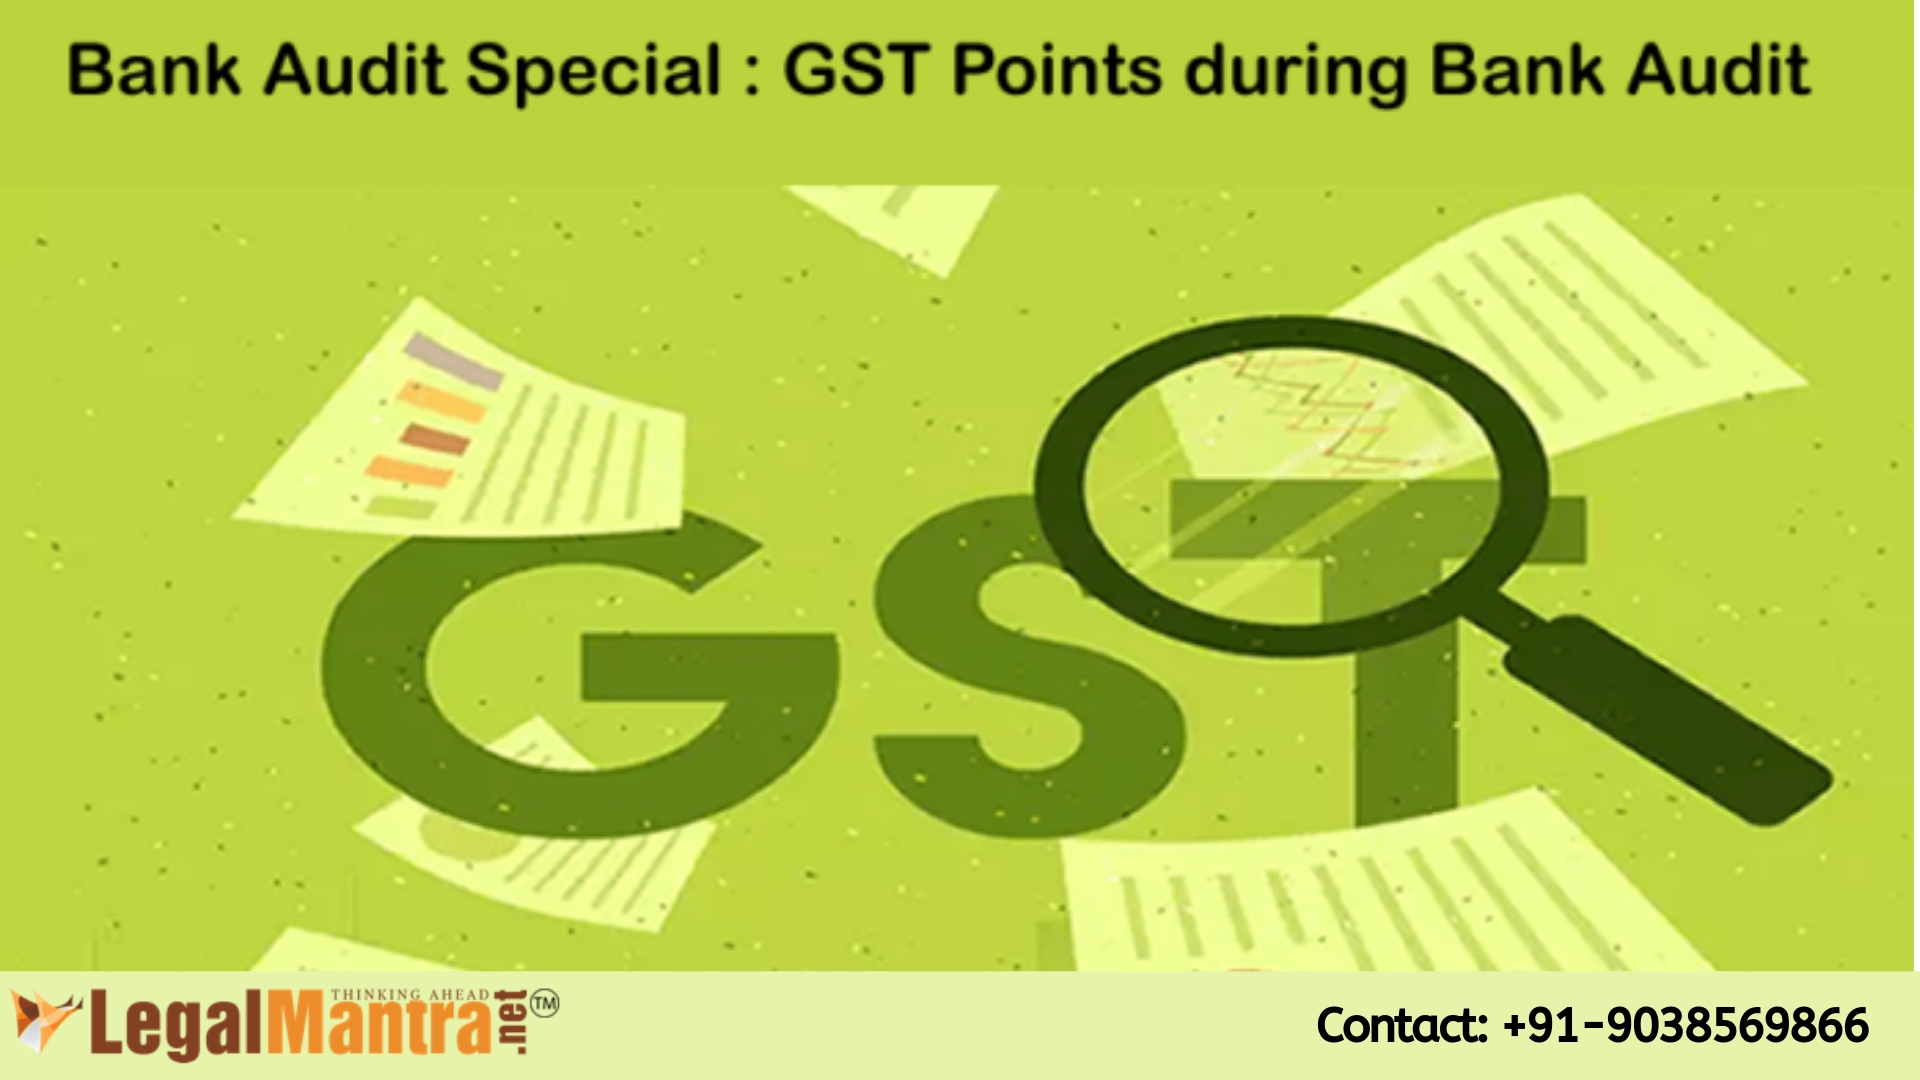 Bank Audit Special: GST Points during Bank Audit